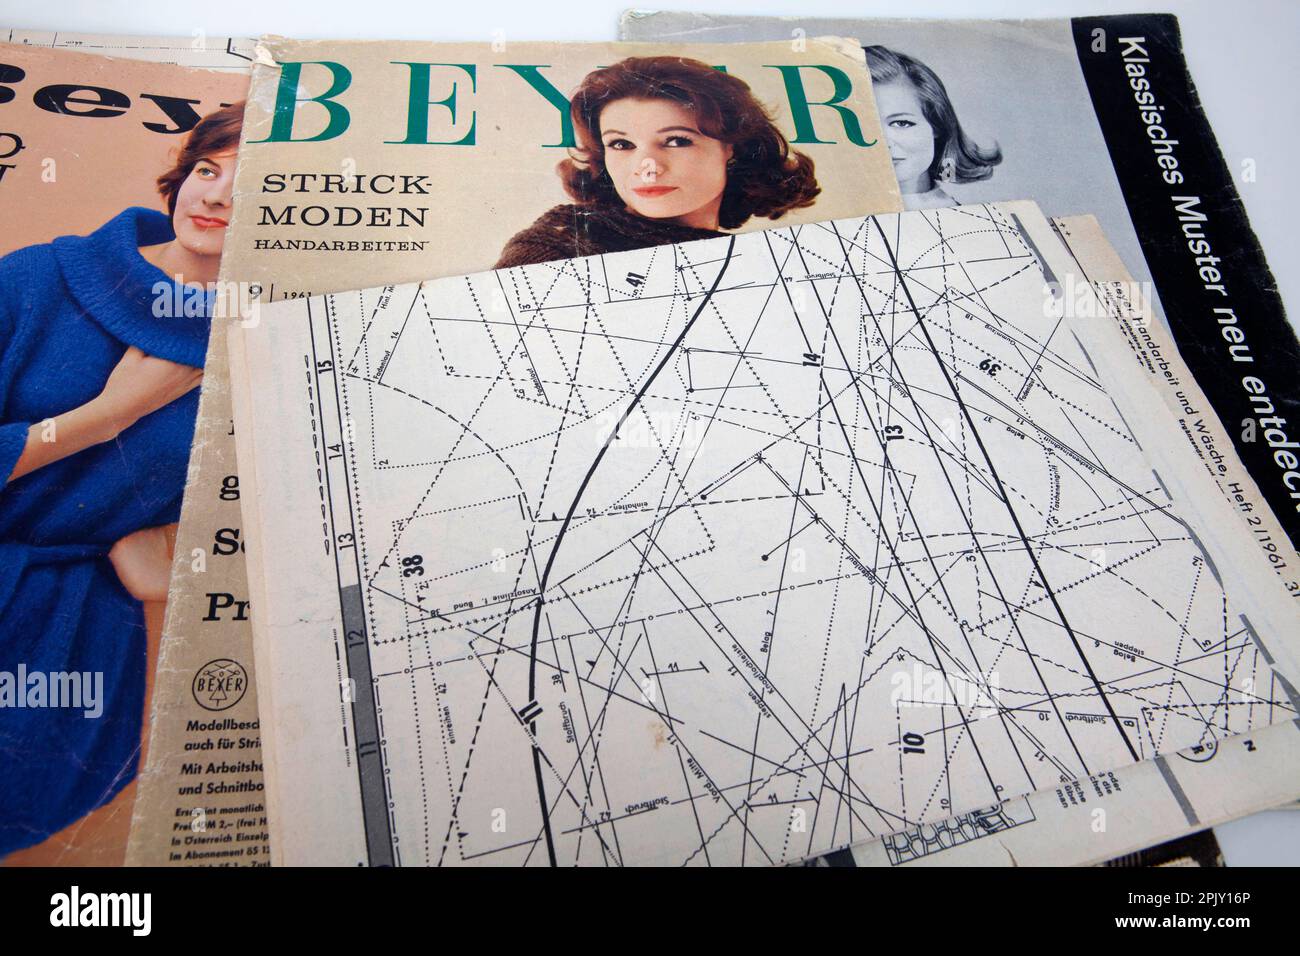 Old fashion magazines, 50s years, Germany, Europe Stock Photo